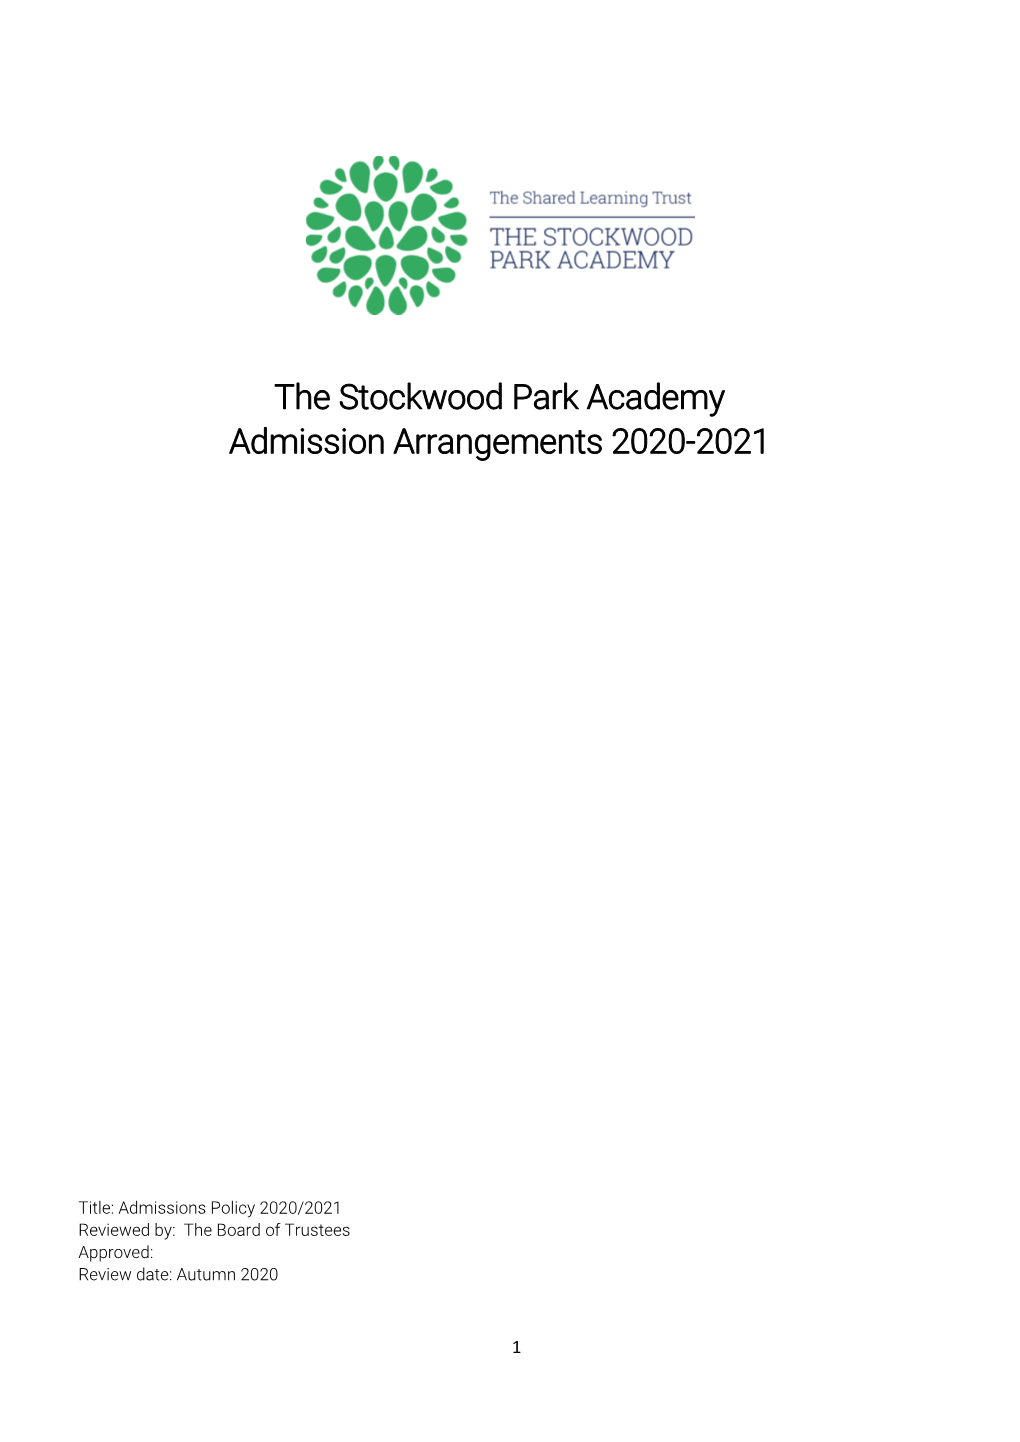 The Stockwood Park Academy Admission Arrangements 2020-2021